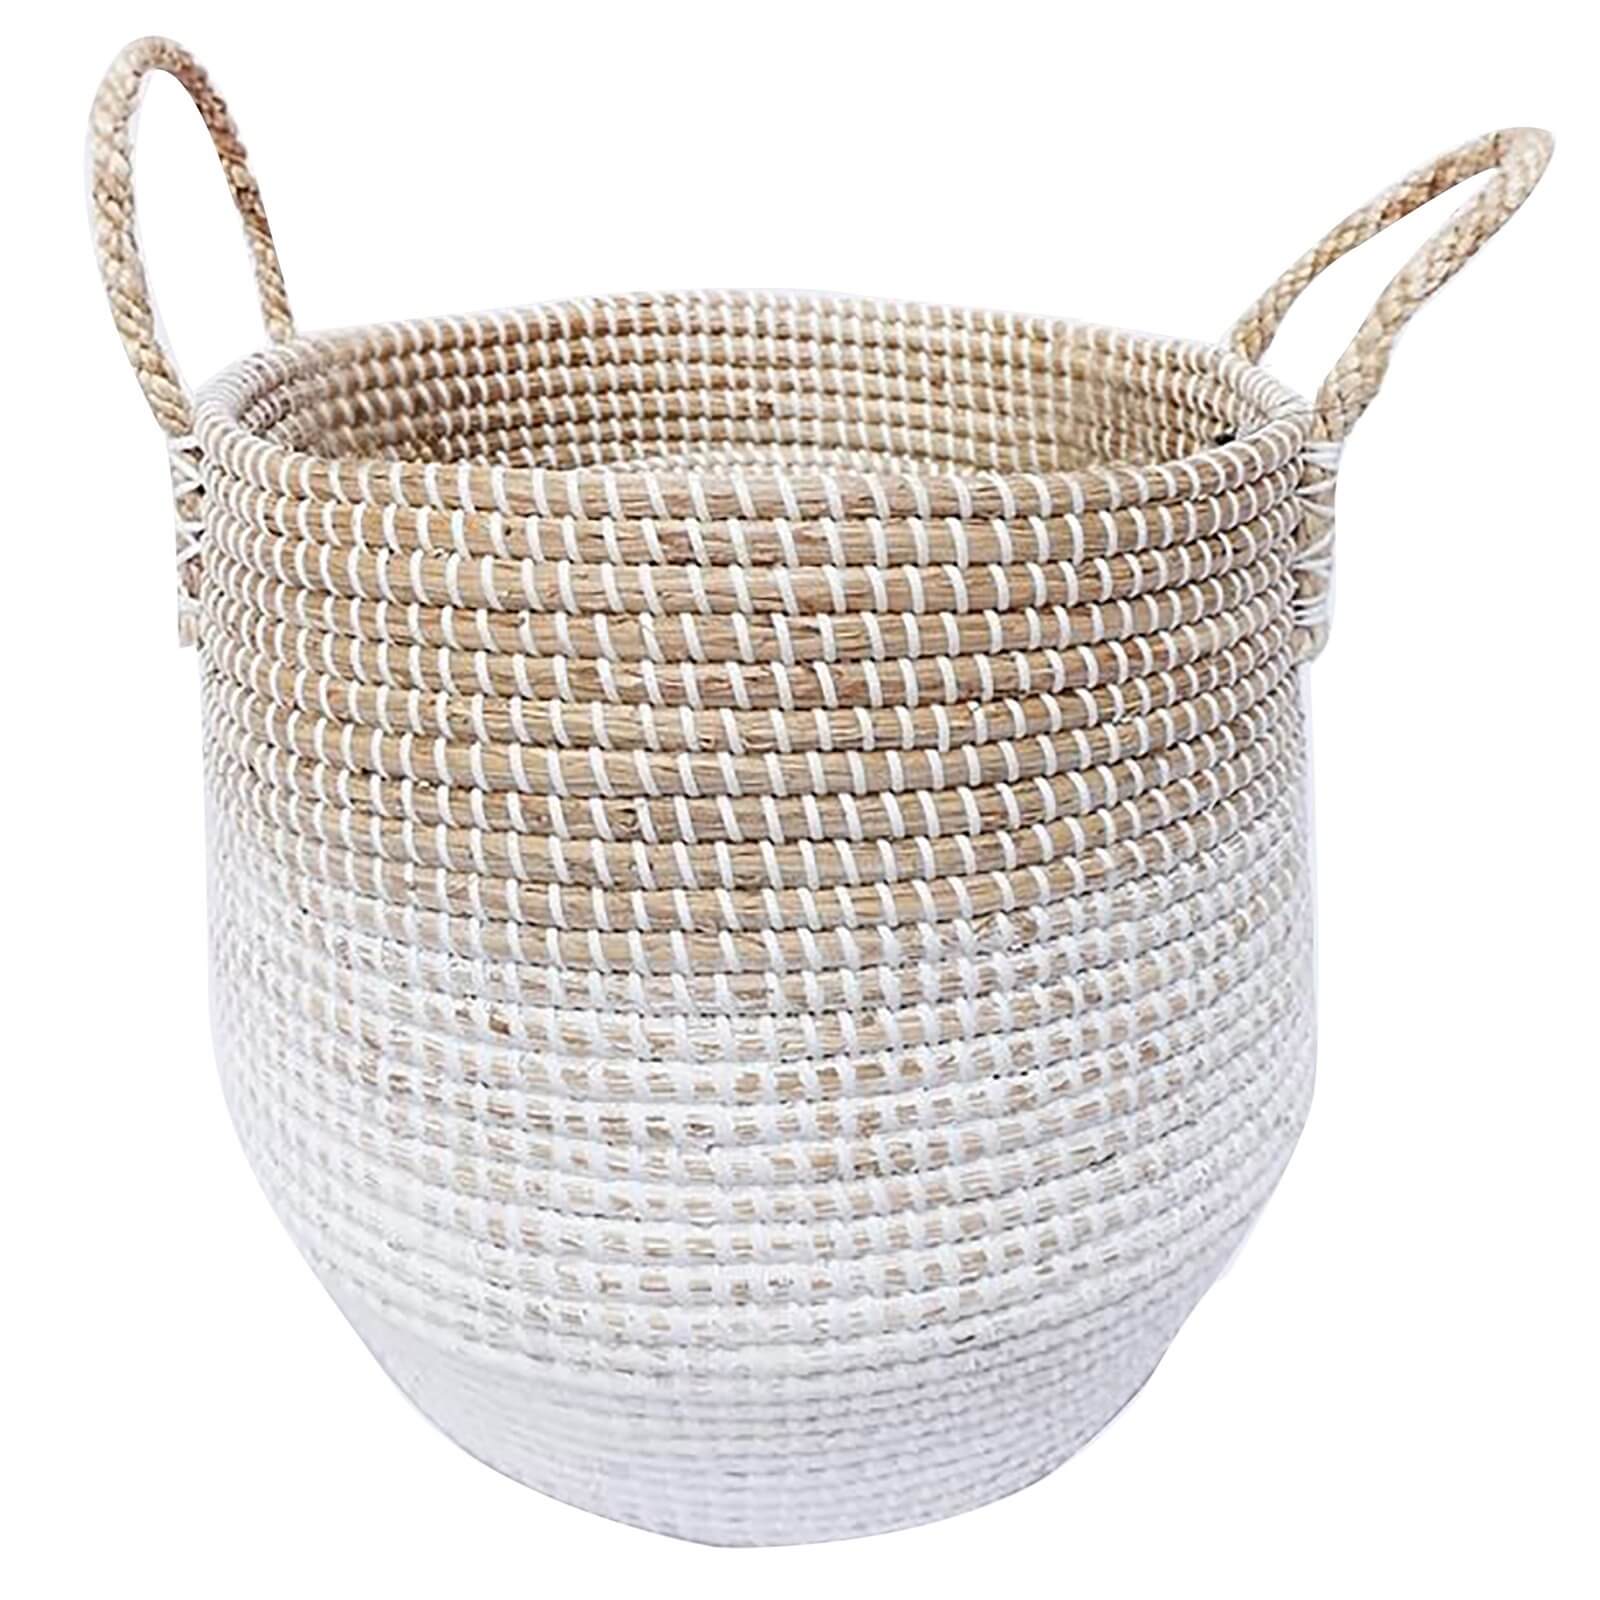 Small Seagrass Basket - White